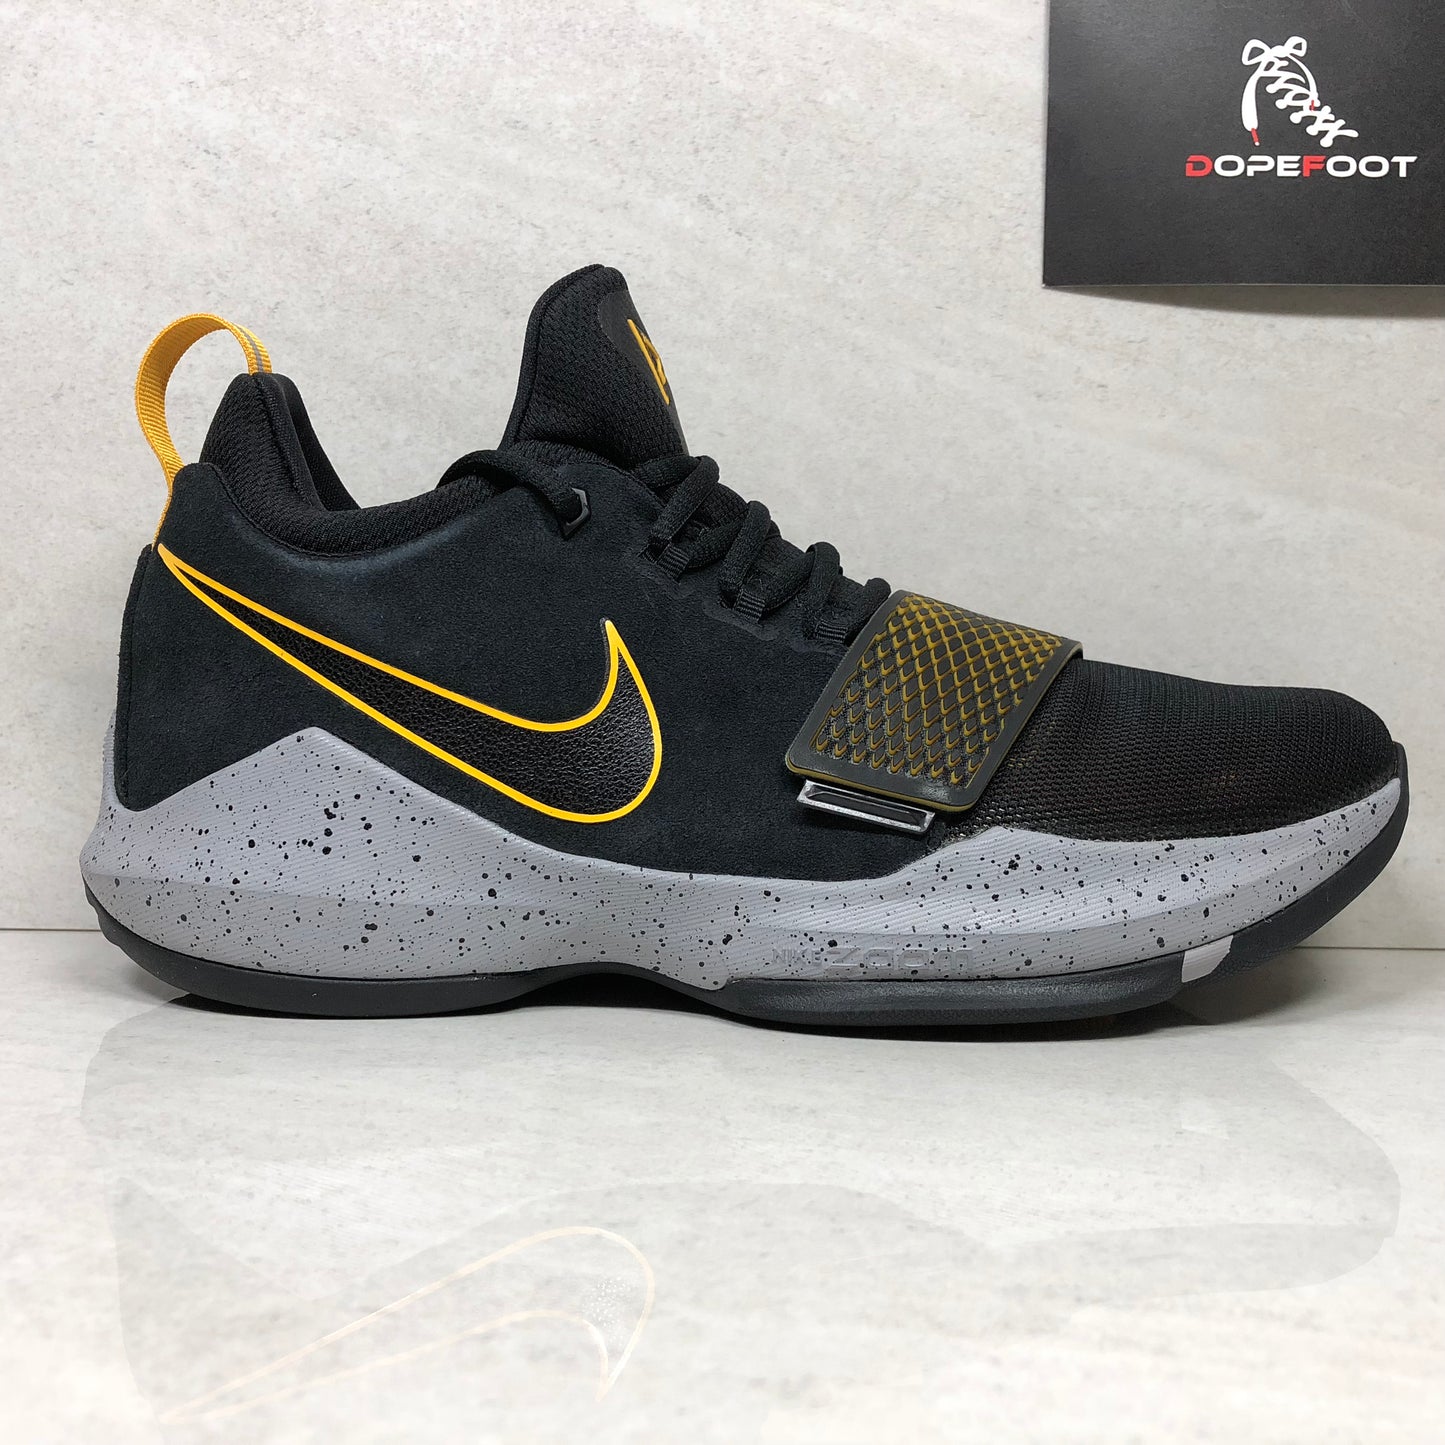 Nike Basketball PG1 - 878627-006 - Homme Taille 10 Noir / Or Université